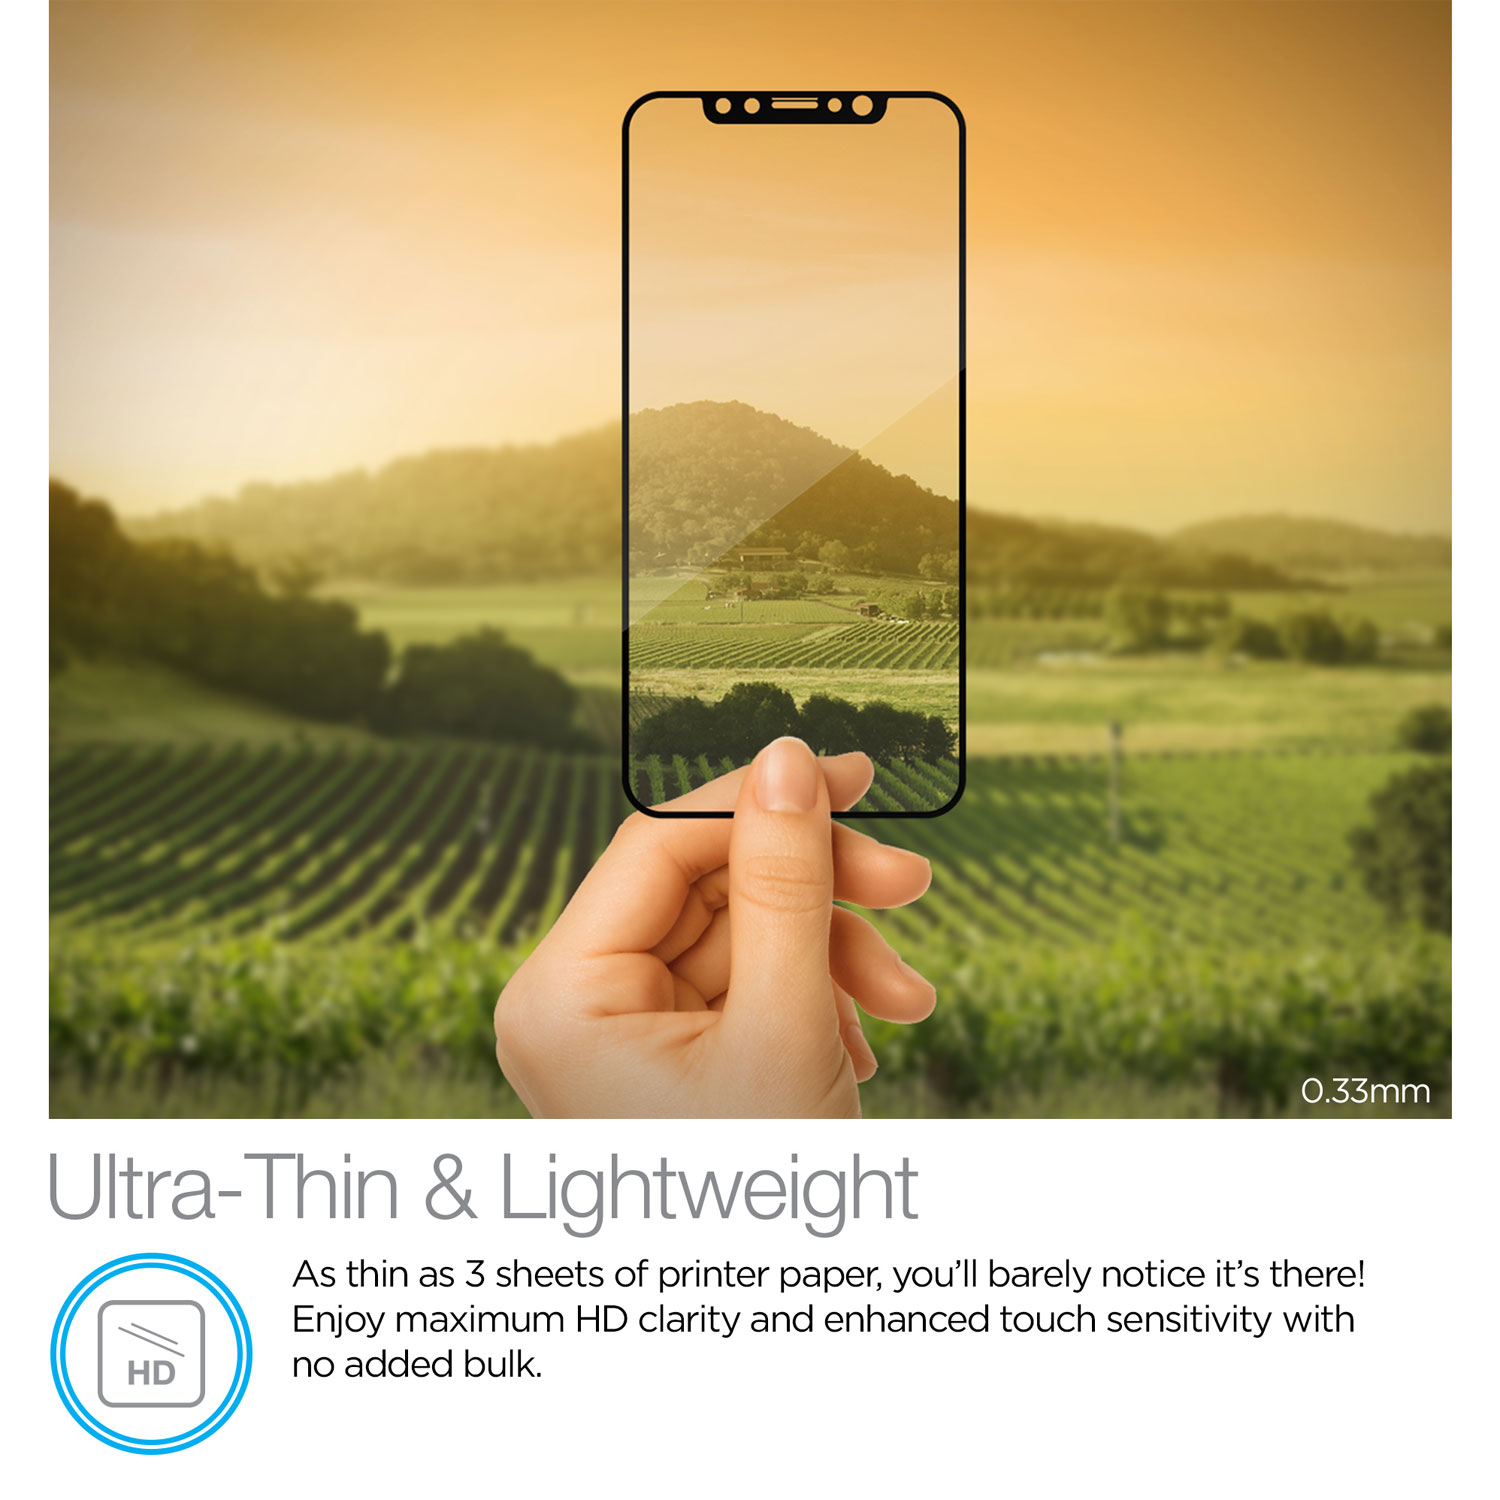 iPhone X Premium HD 3D Tempered Glass